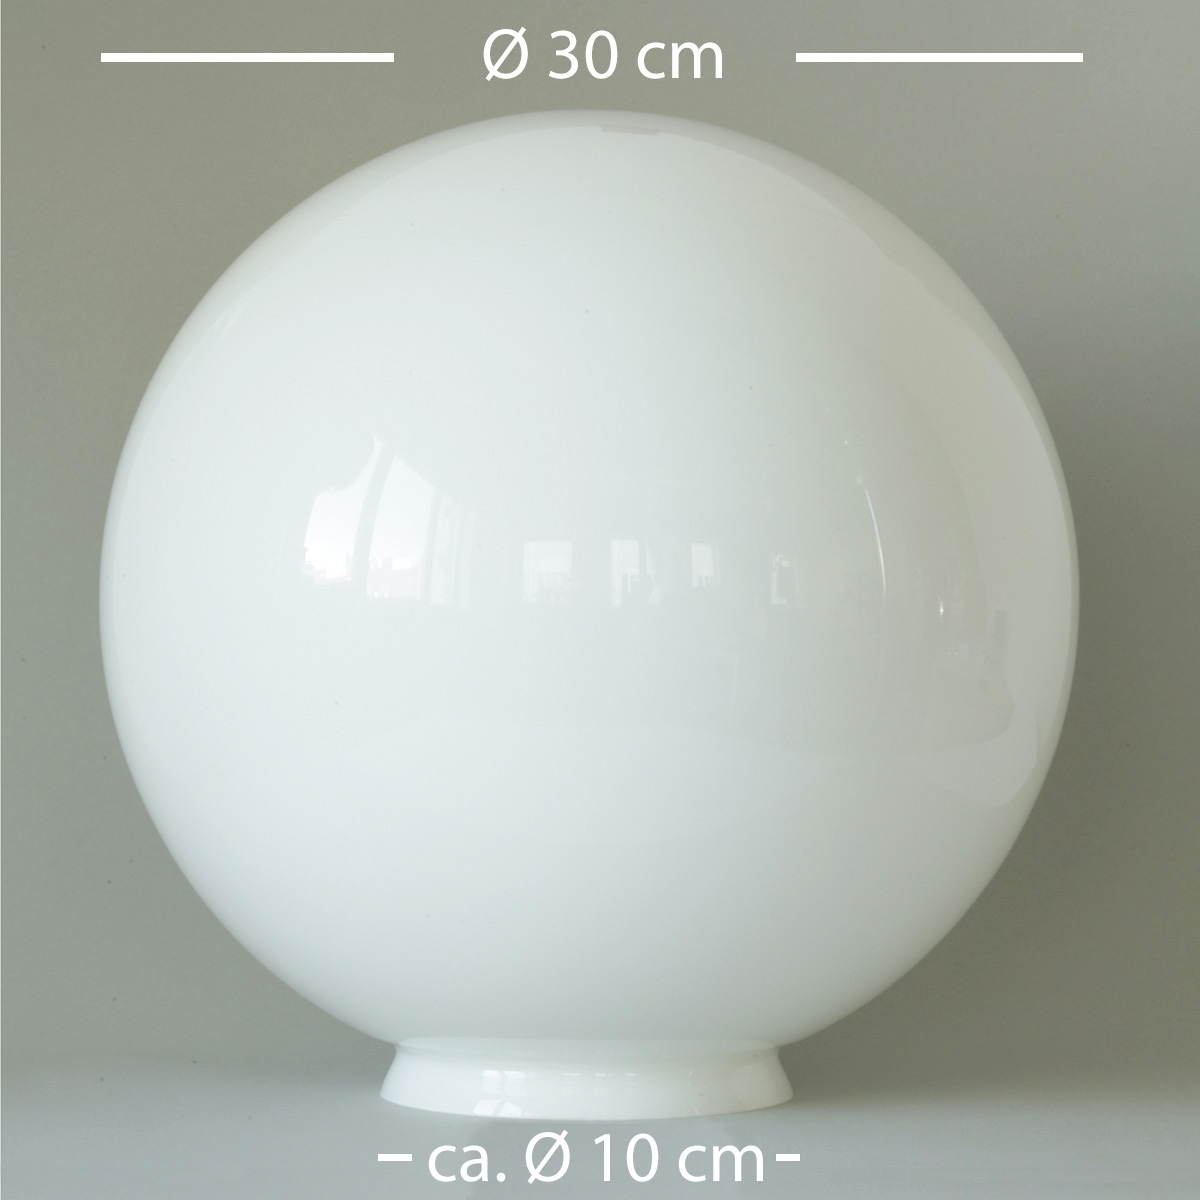 Glass ball Ø 30 cm in opal white with Ø 10 cm lip